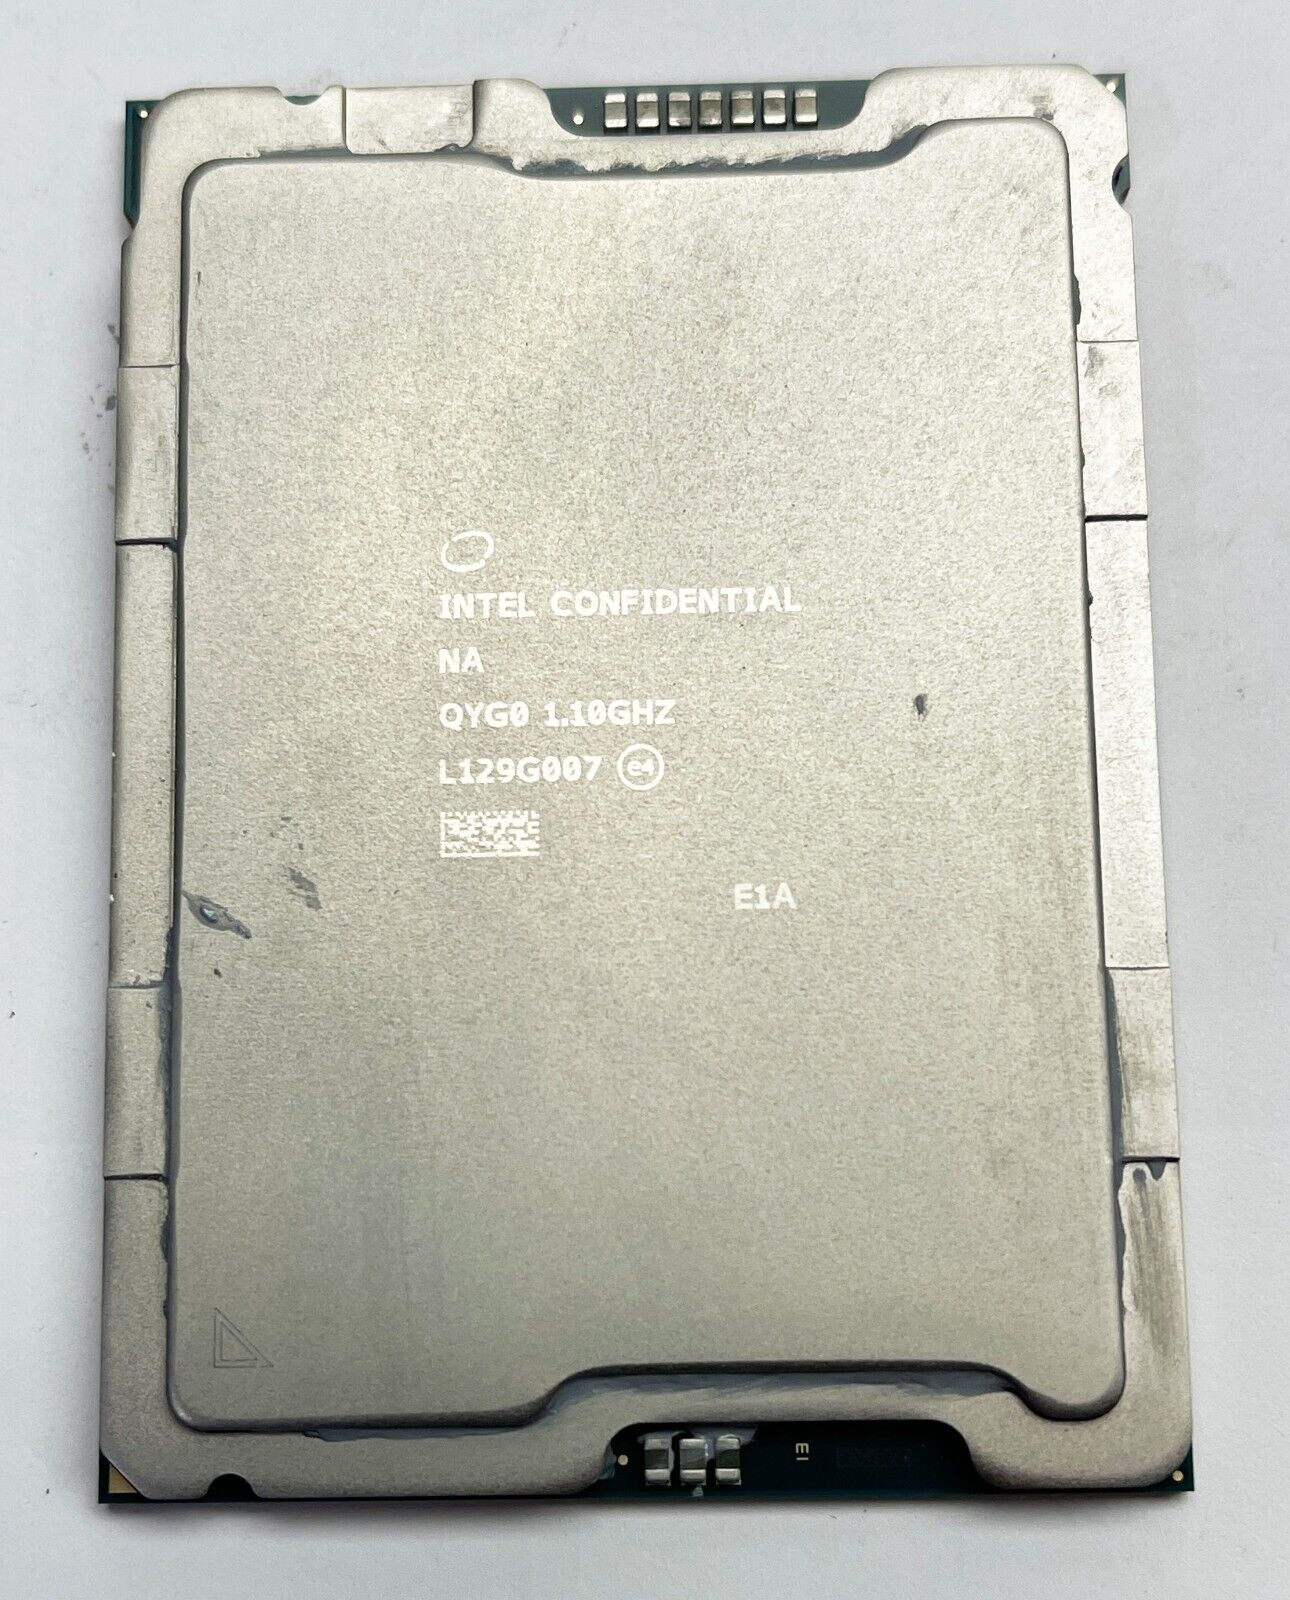 Intel Confidential QYG0  1.10 GHz L129G007 CPU Processor intel Xeon Platinum